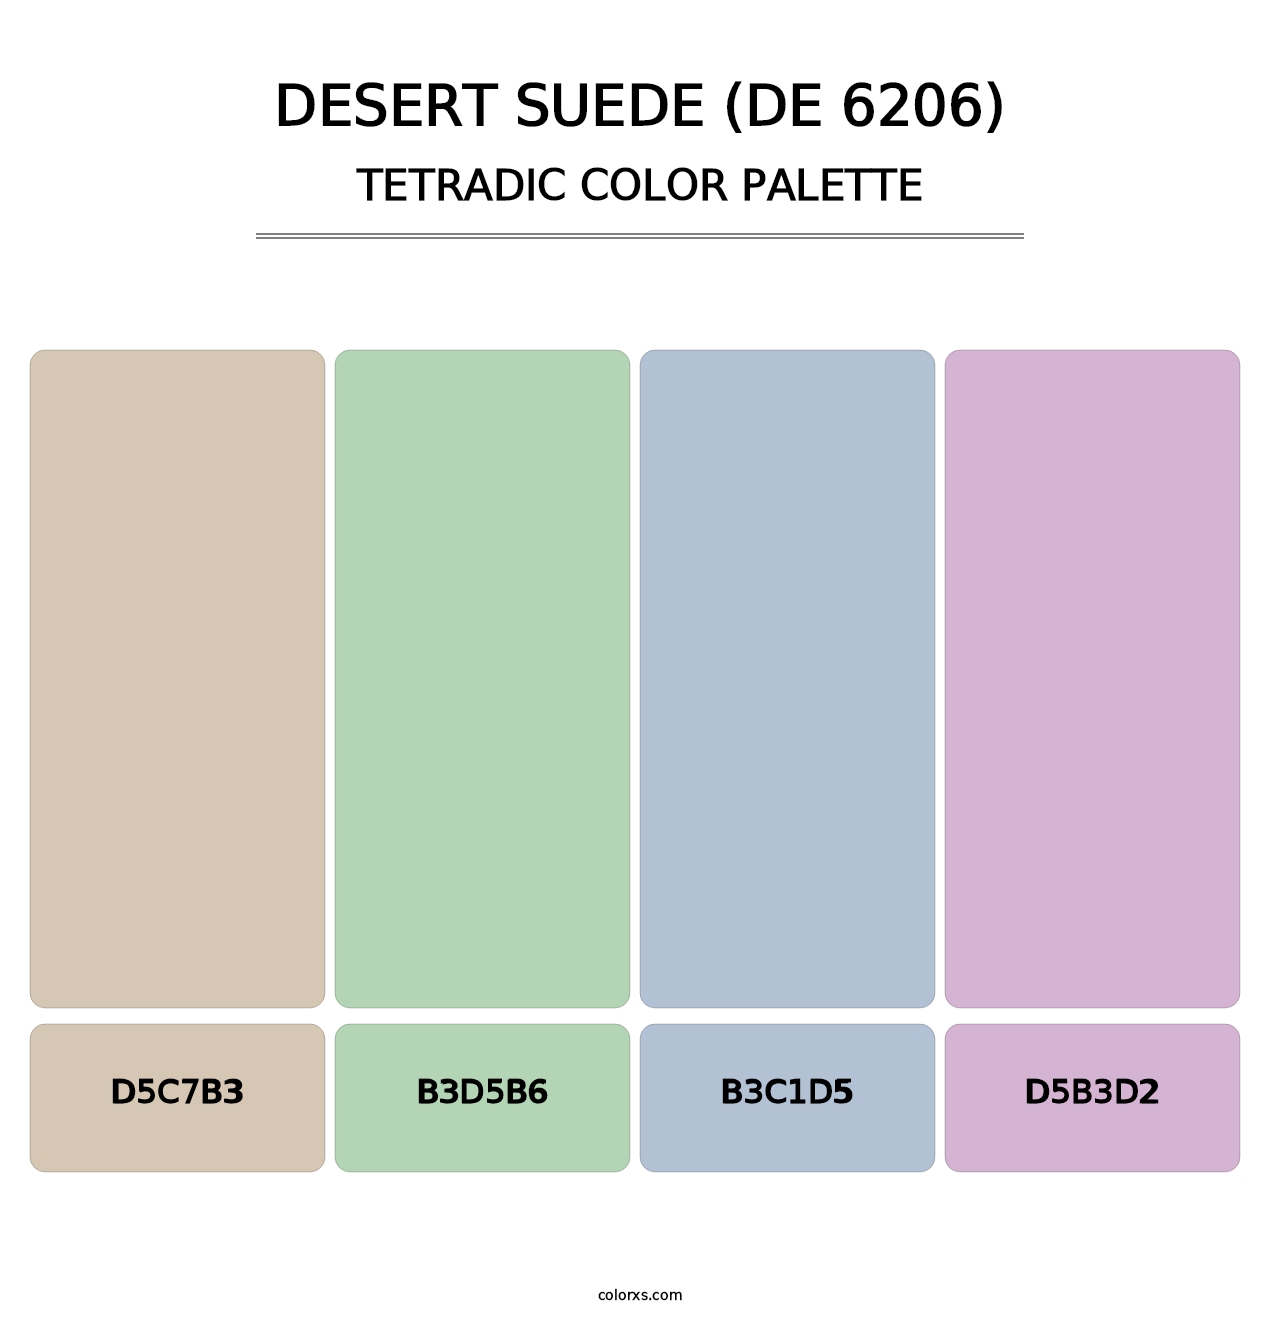 Desert Suede (DE 6206) - Tetradic Color Palette